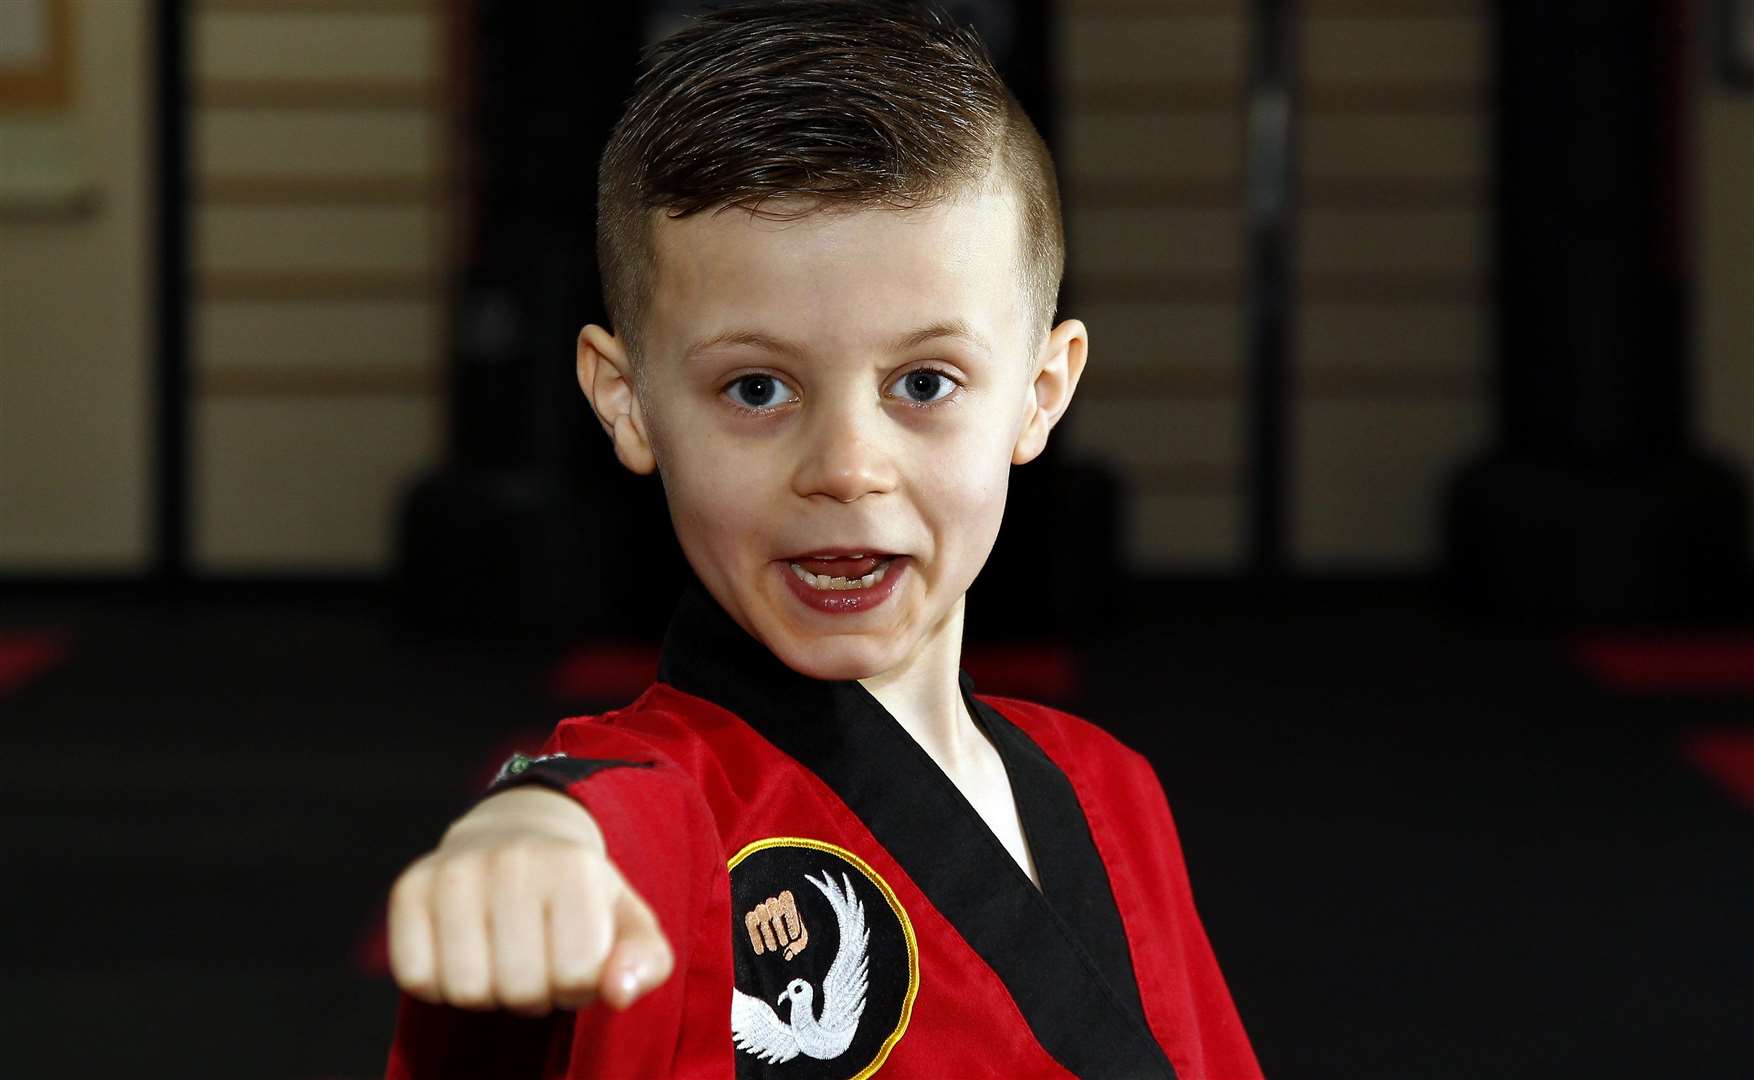 Eddy Cook does karate training three times a week. Picture: Sean Aidan.